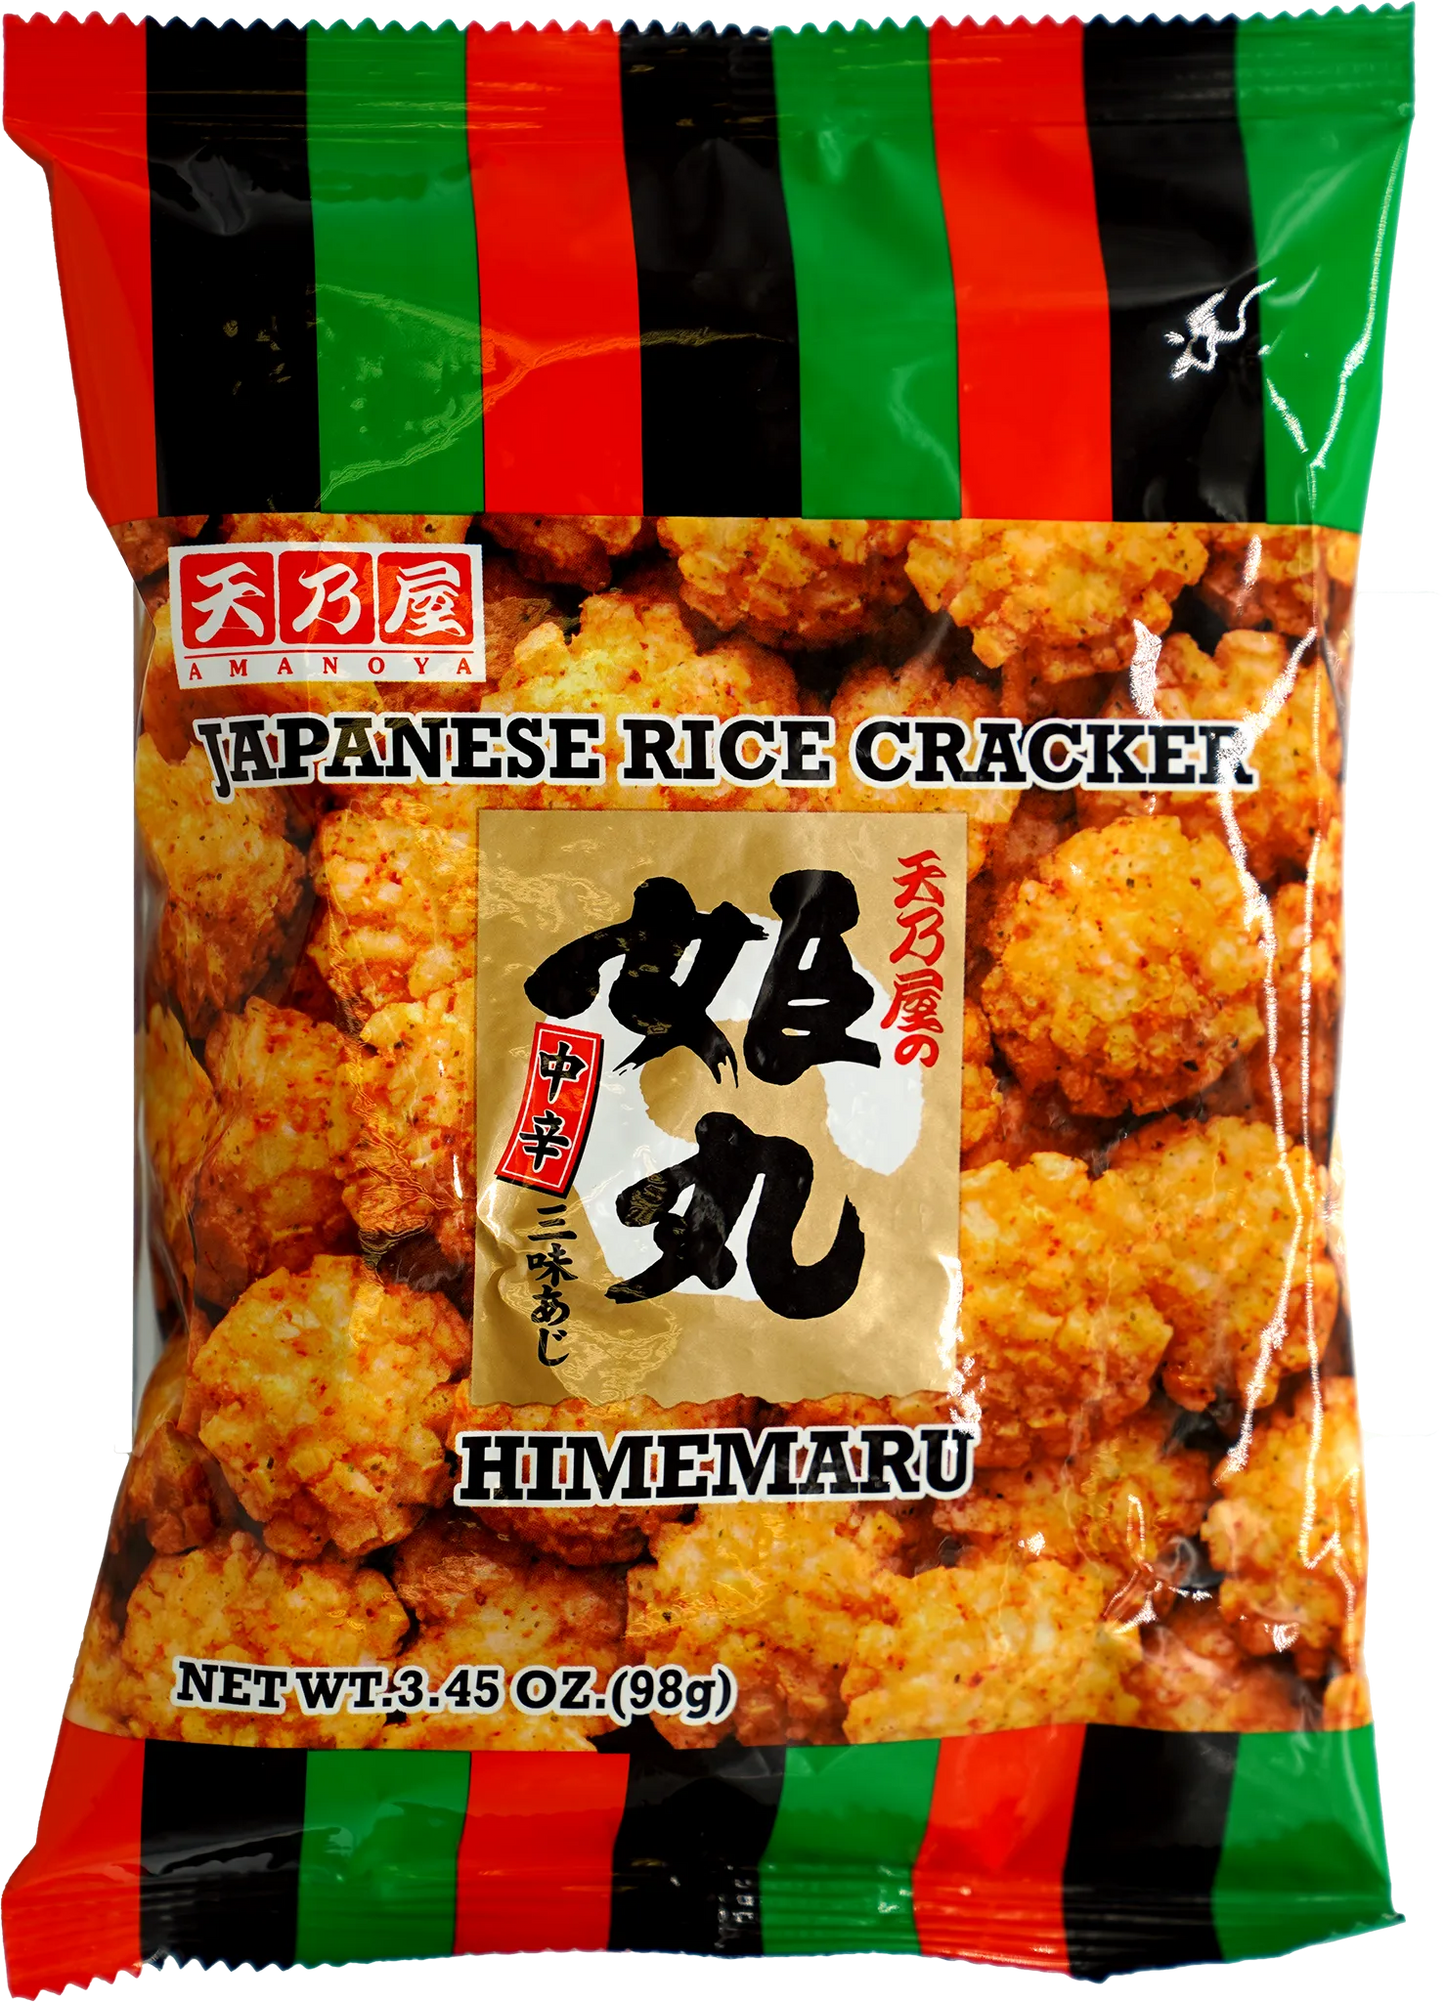 Amanoya Himemaru Rice Cracker 3.45 oz